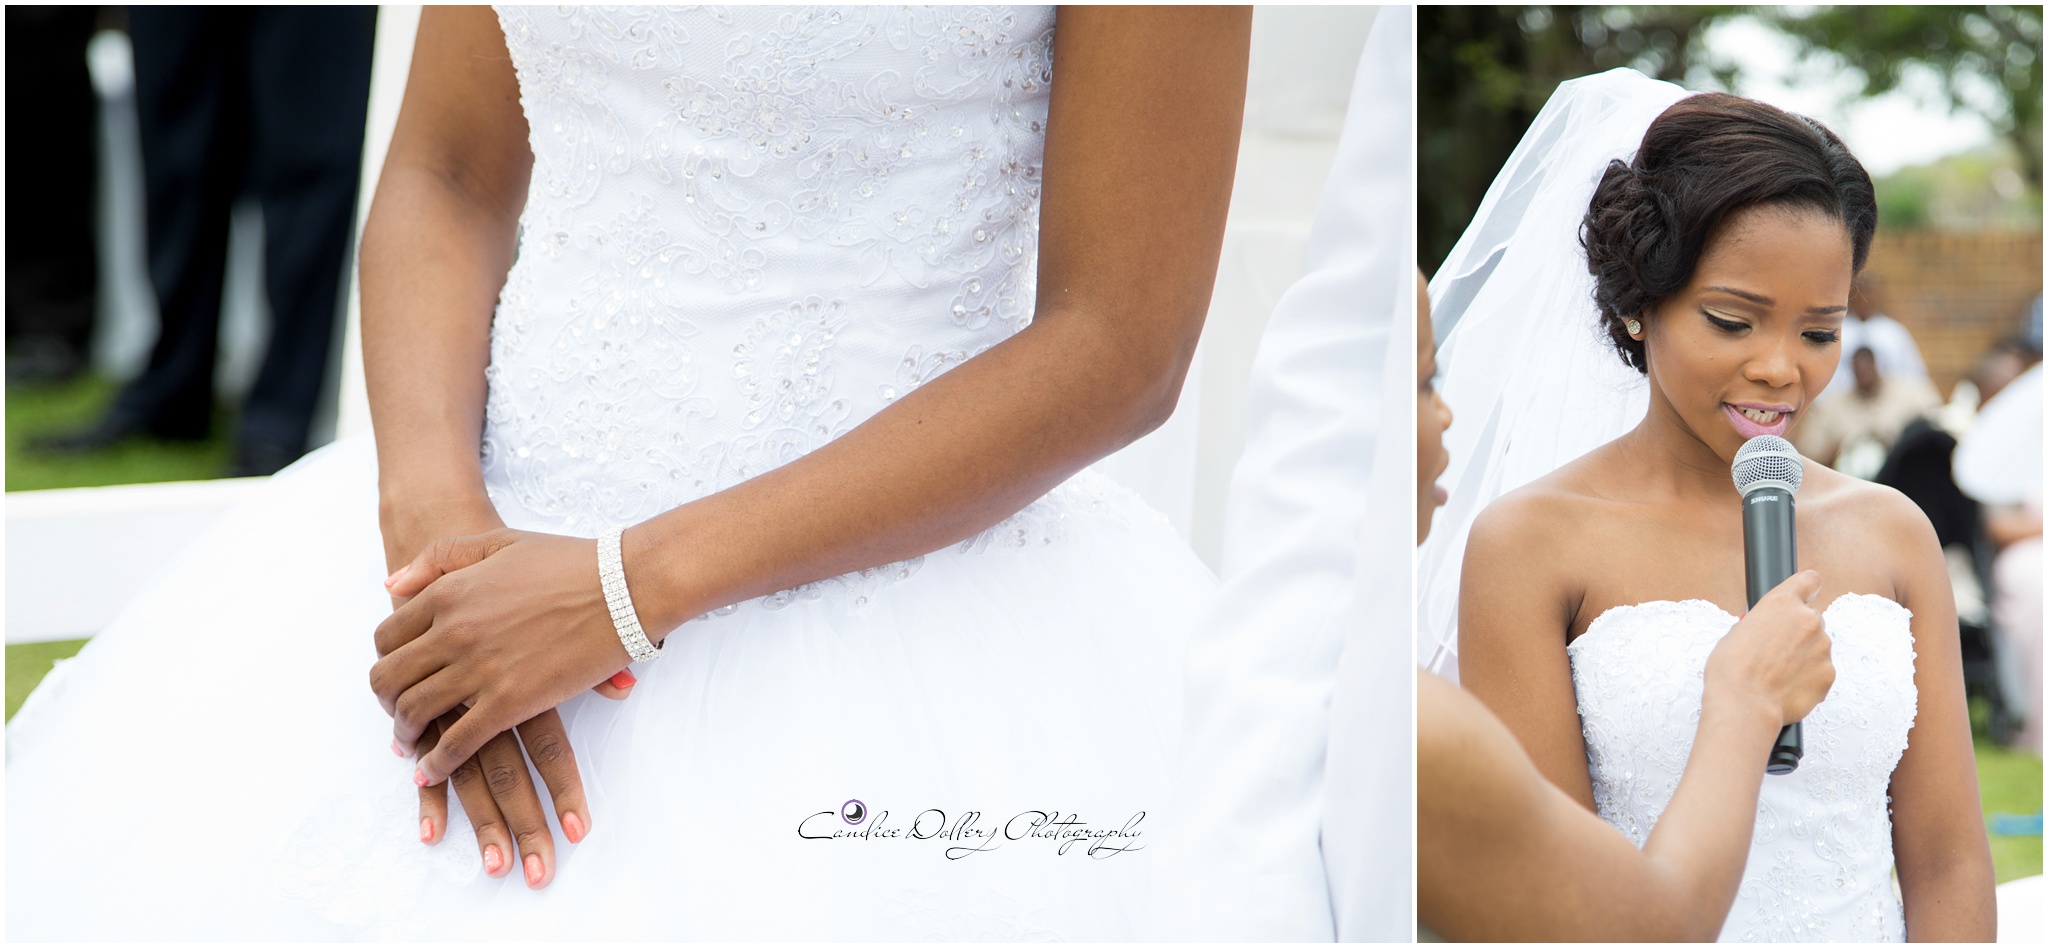 Asanda & Bonga's Wedding - Candice Dollery Photography_8207